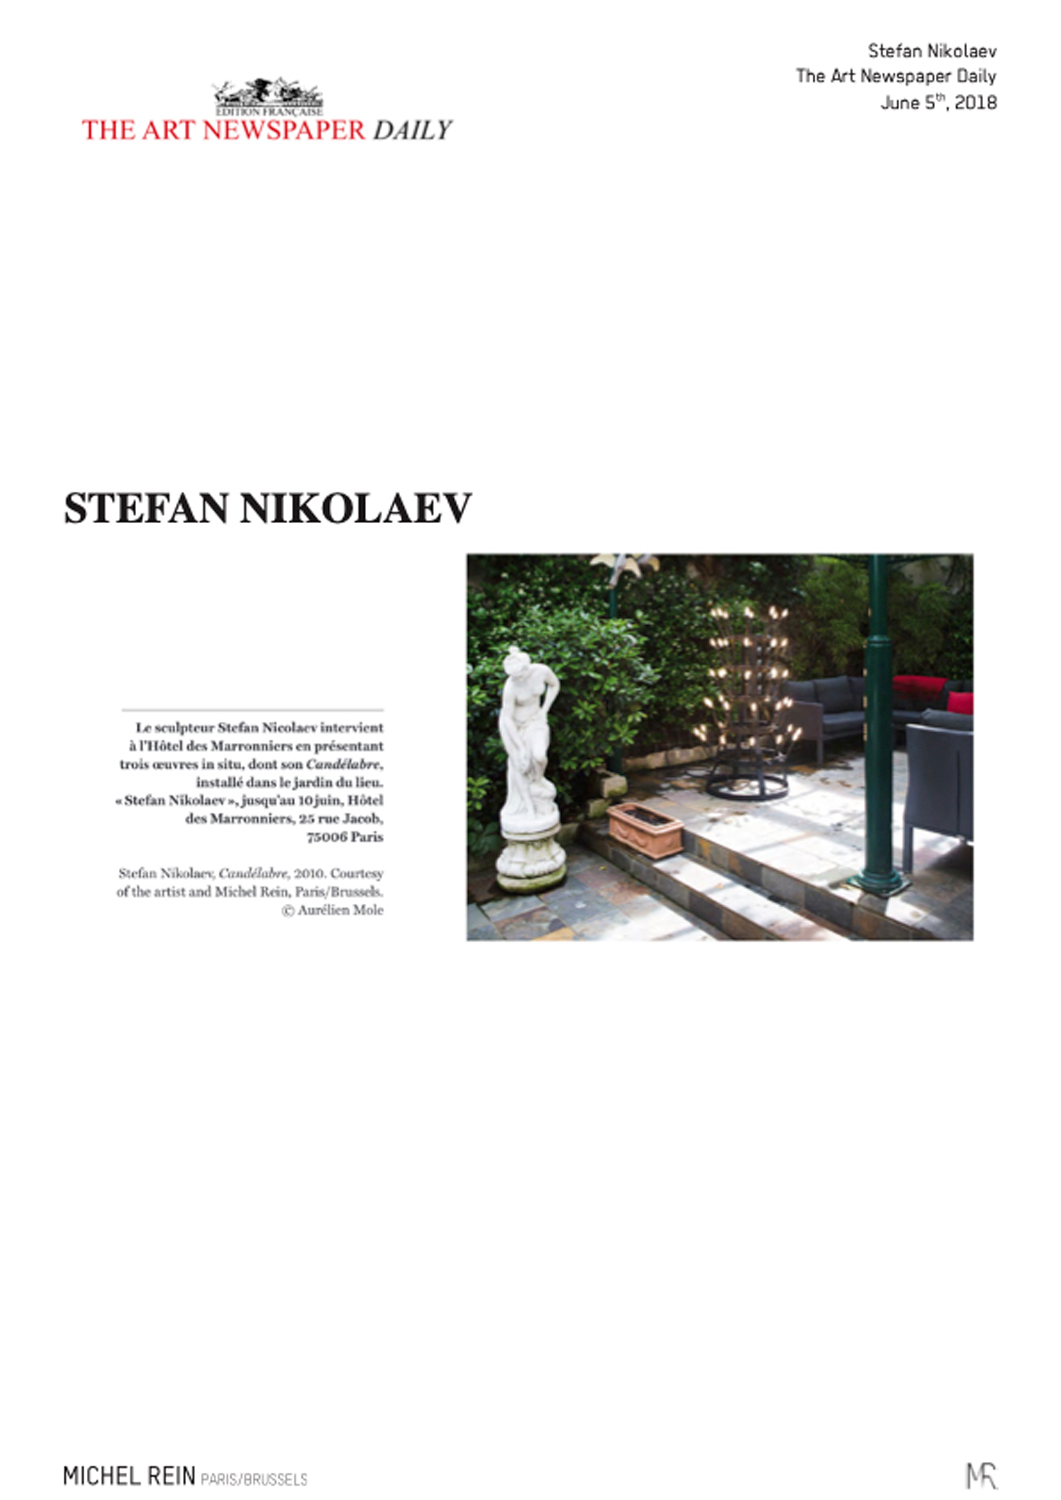 Stefan Nikolaev - THE ART NEWSPAPER